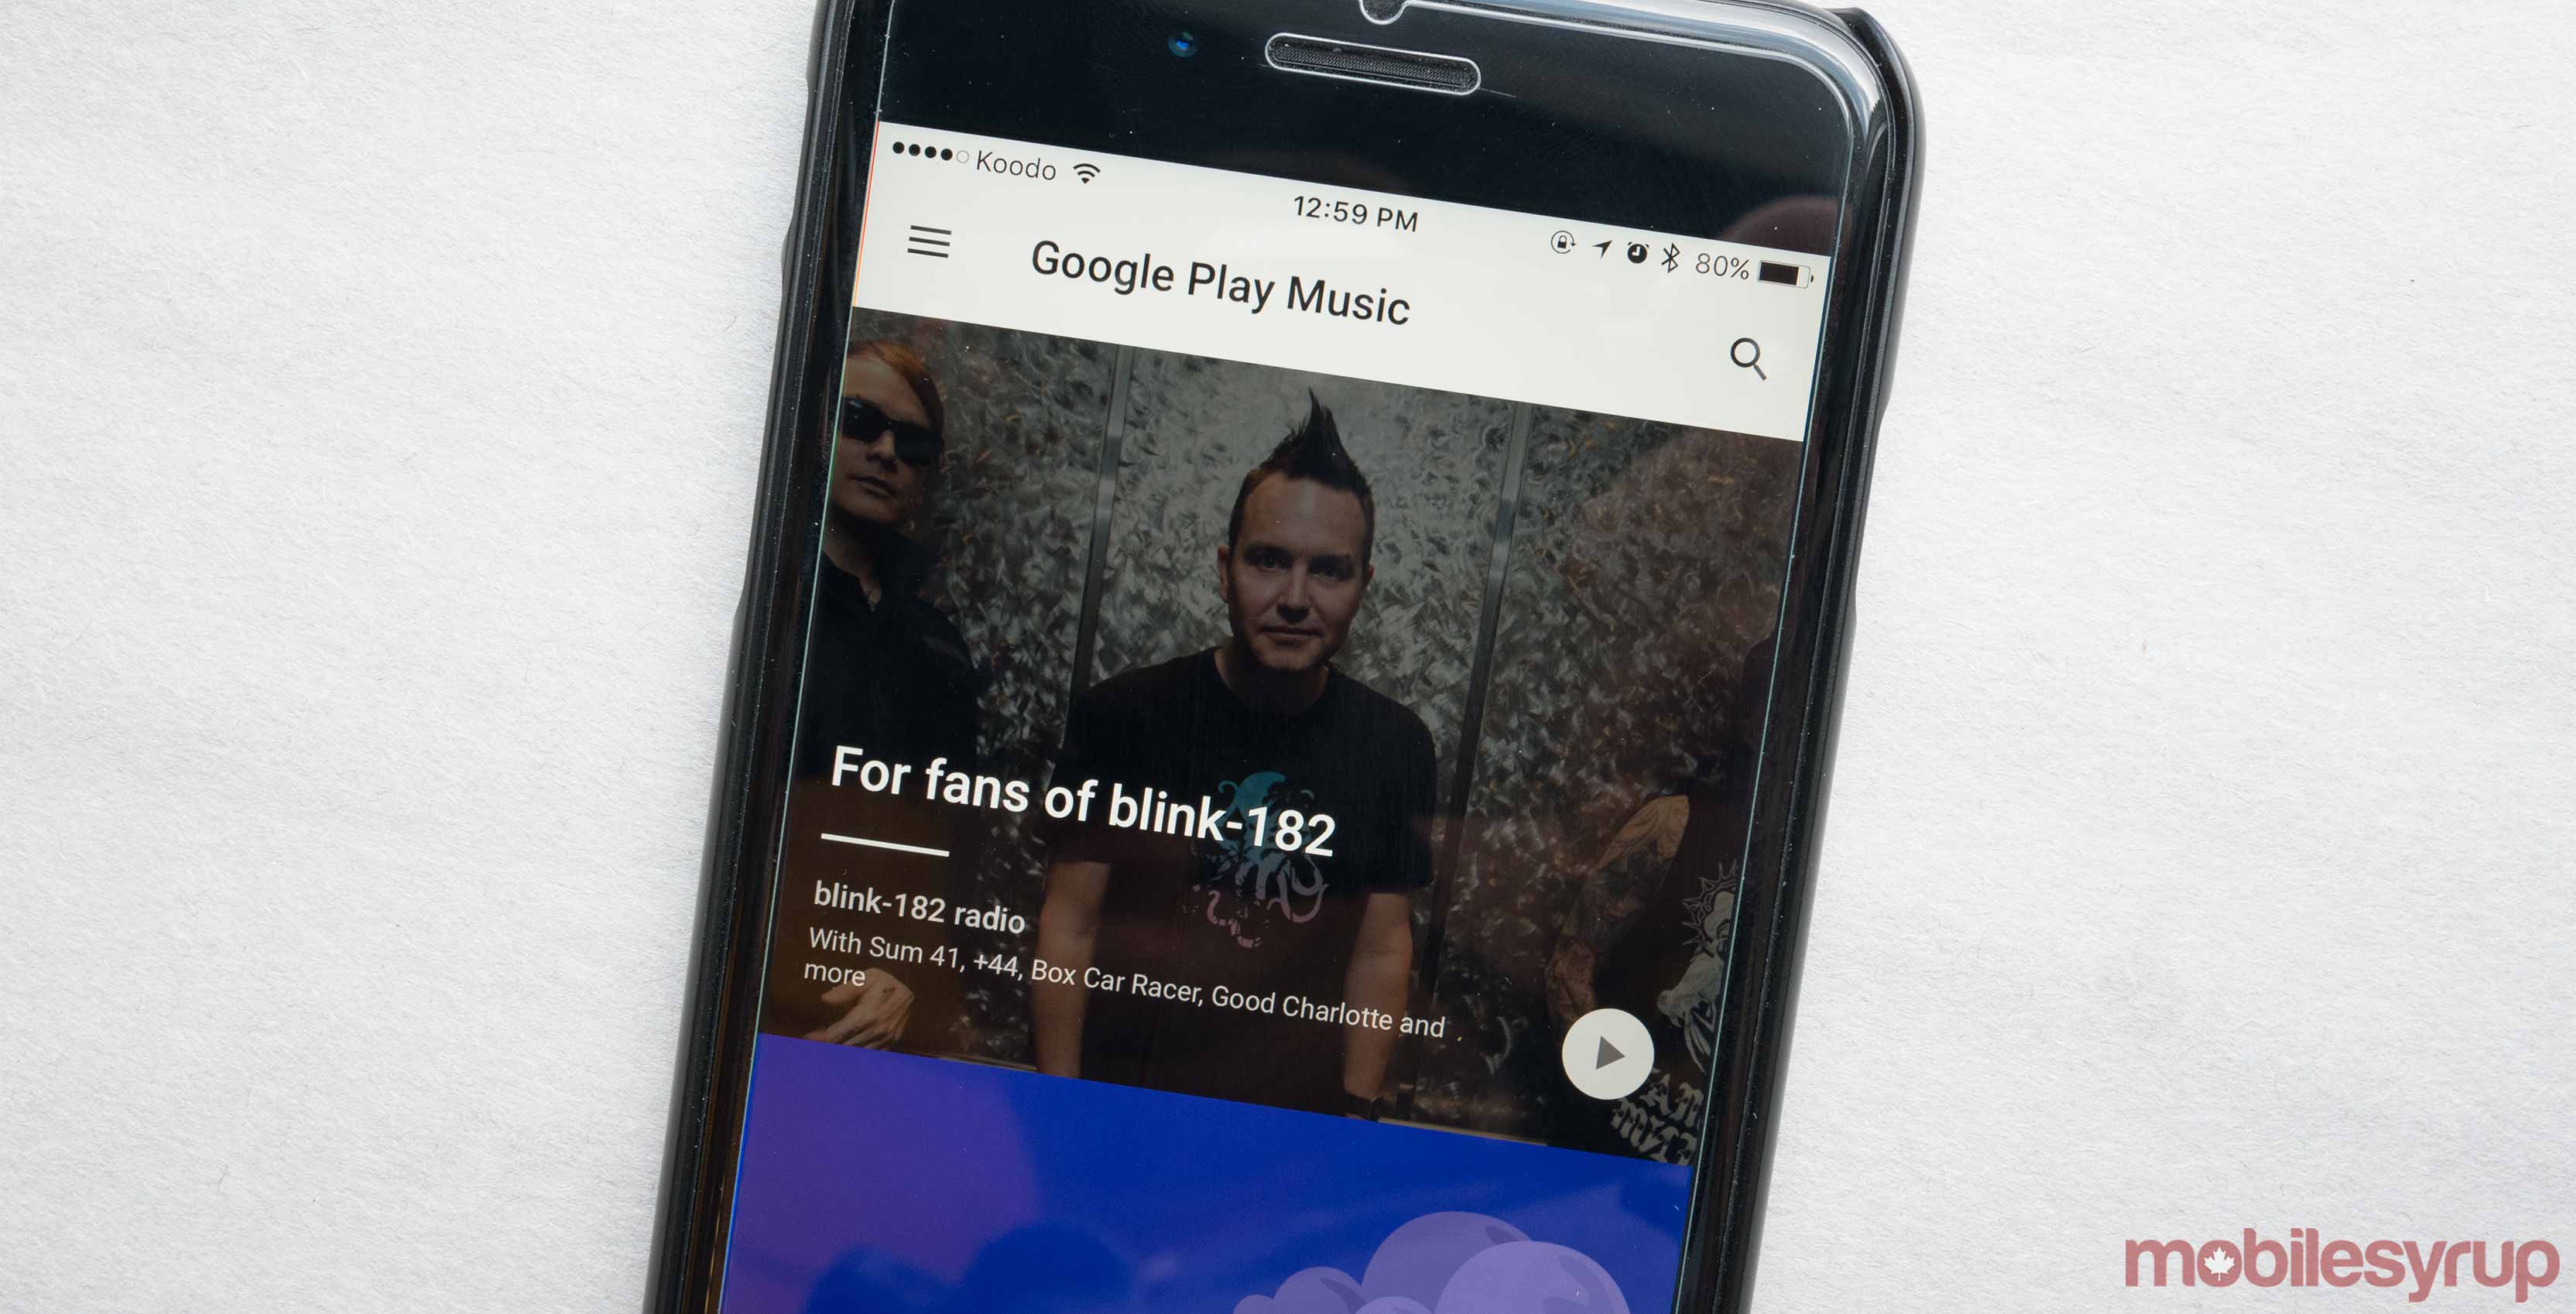 Google Play Music on phone